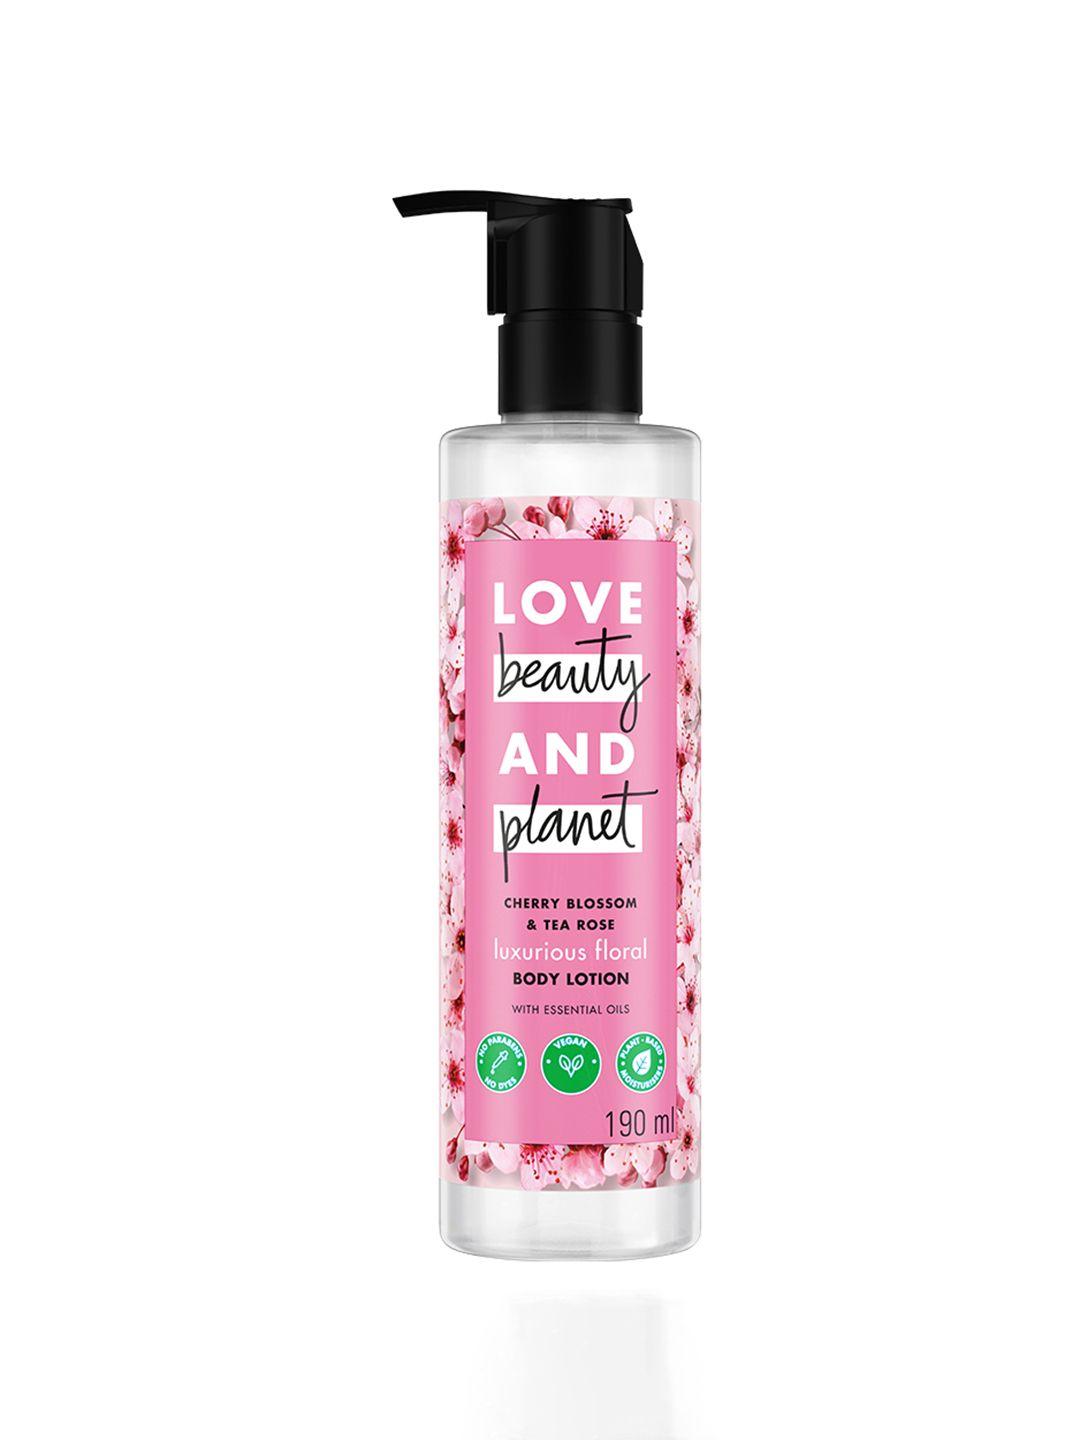 love beauty & planet luxurious cherry blossom & tea rose body lotion - 190 ml